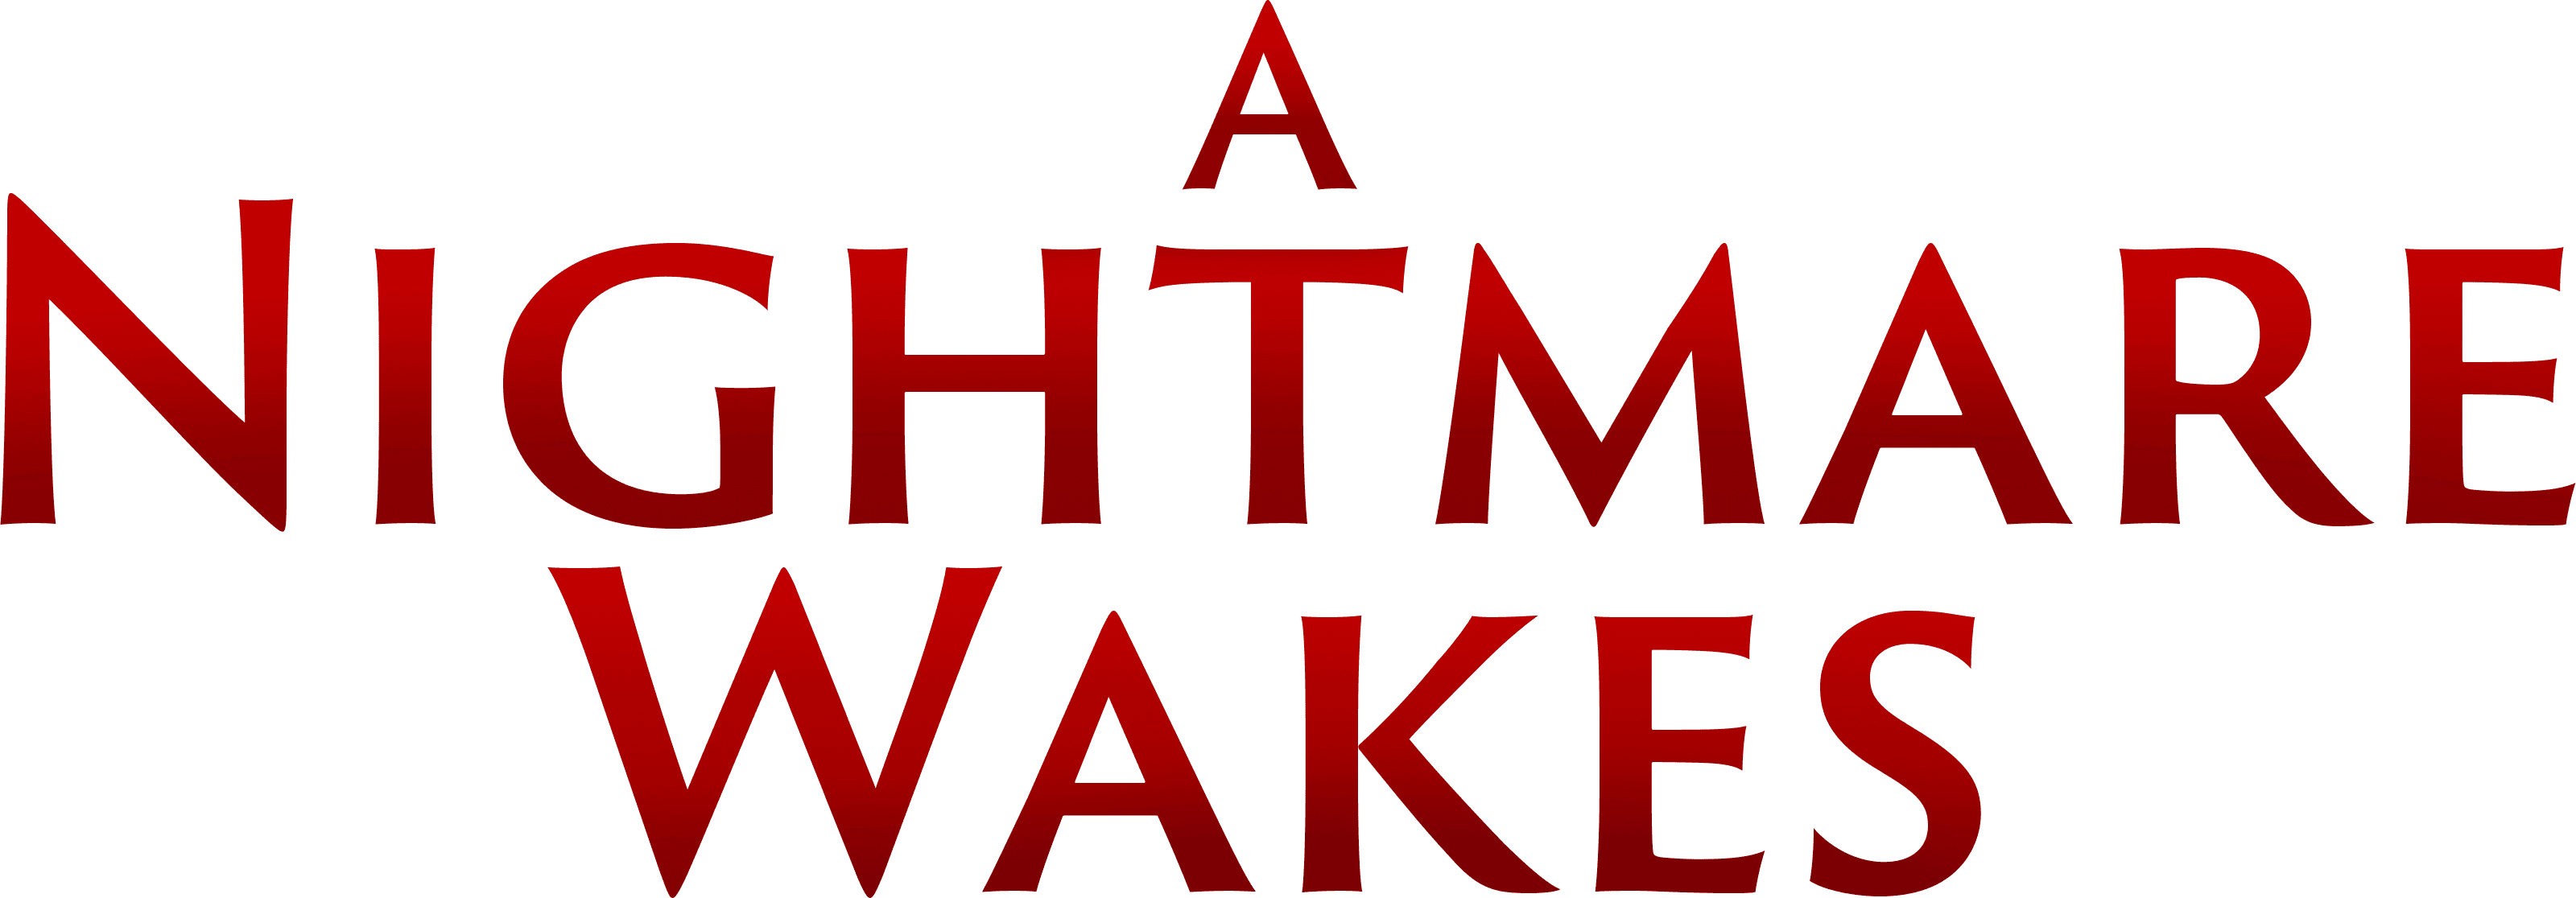 A Nightmare Wakes logo